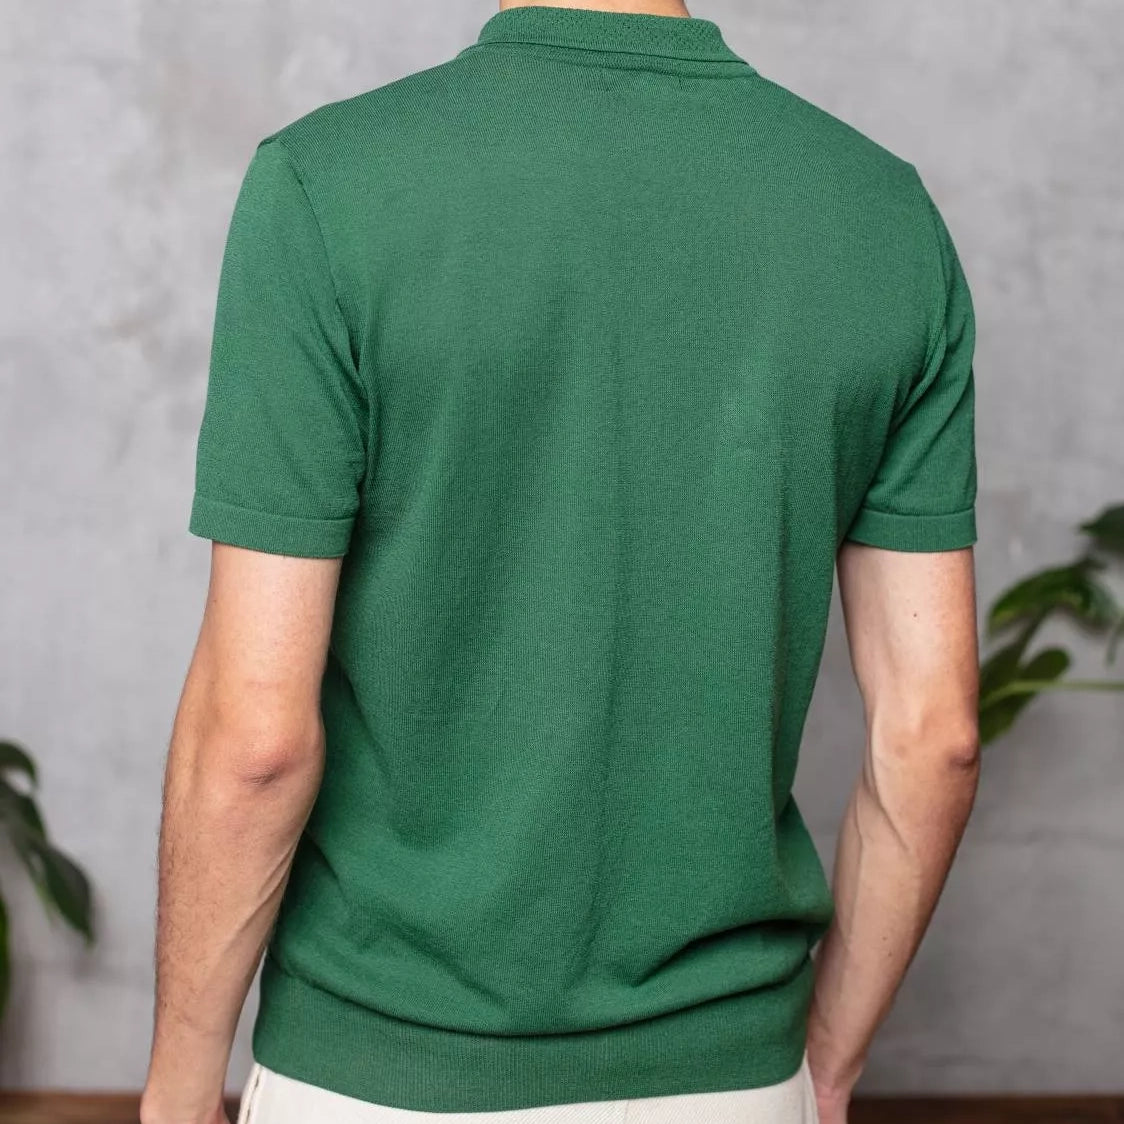 Silno Polo Sweater - Green